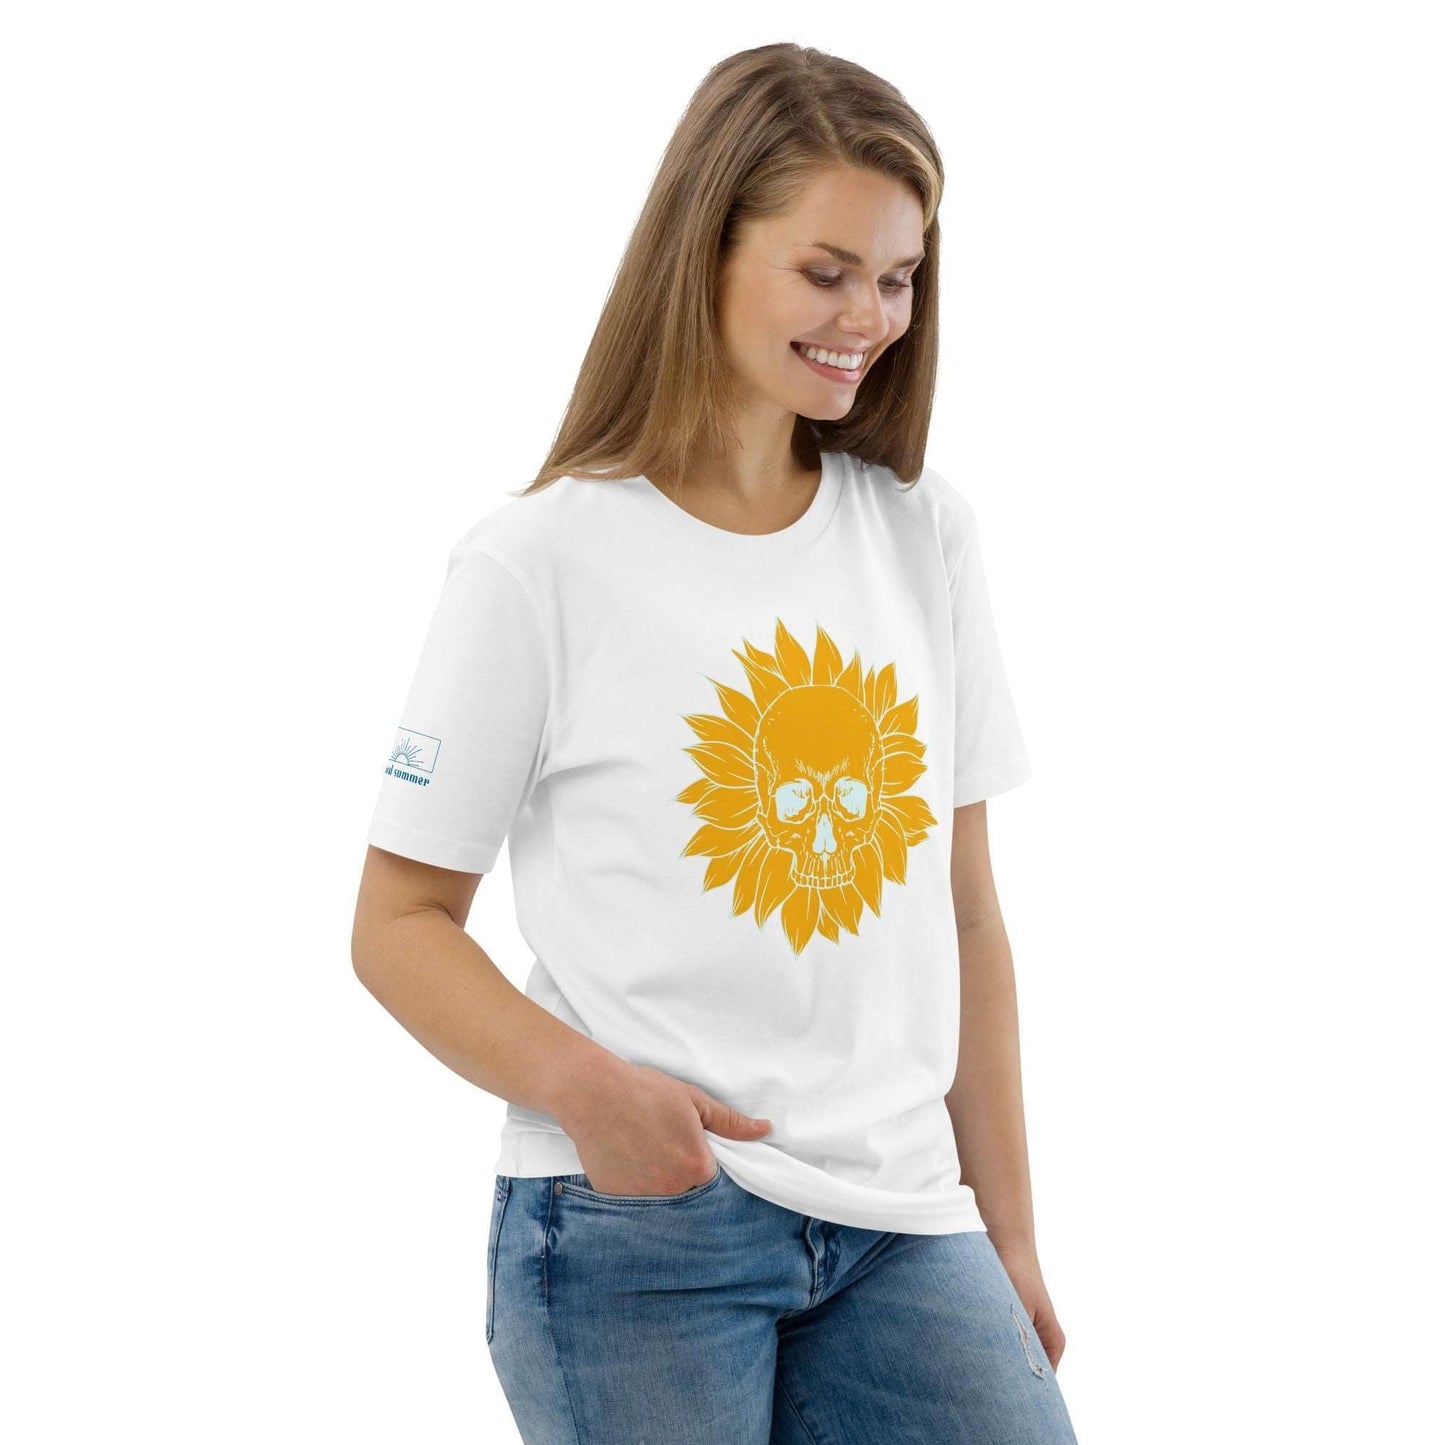 Local Summer Collective Sunflower Unisex Organic Cotton T-Shirt